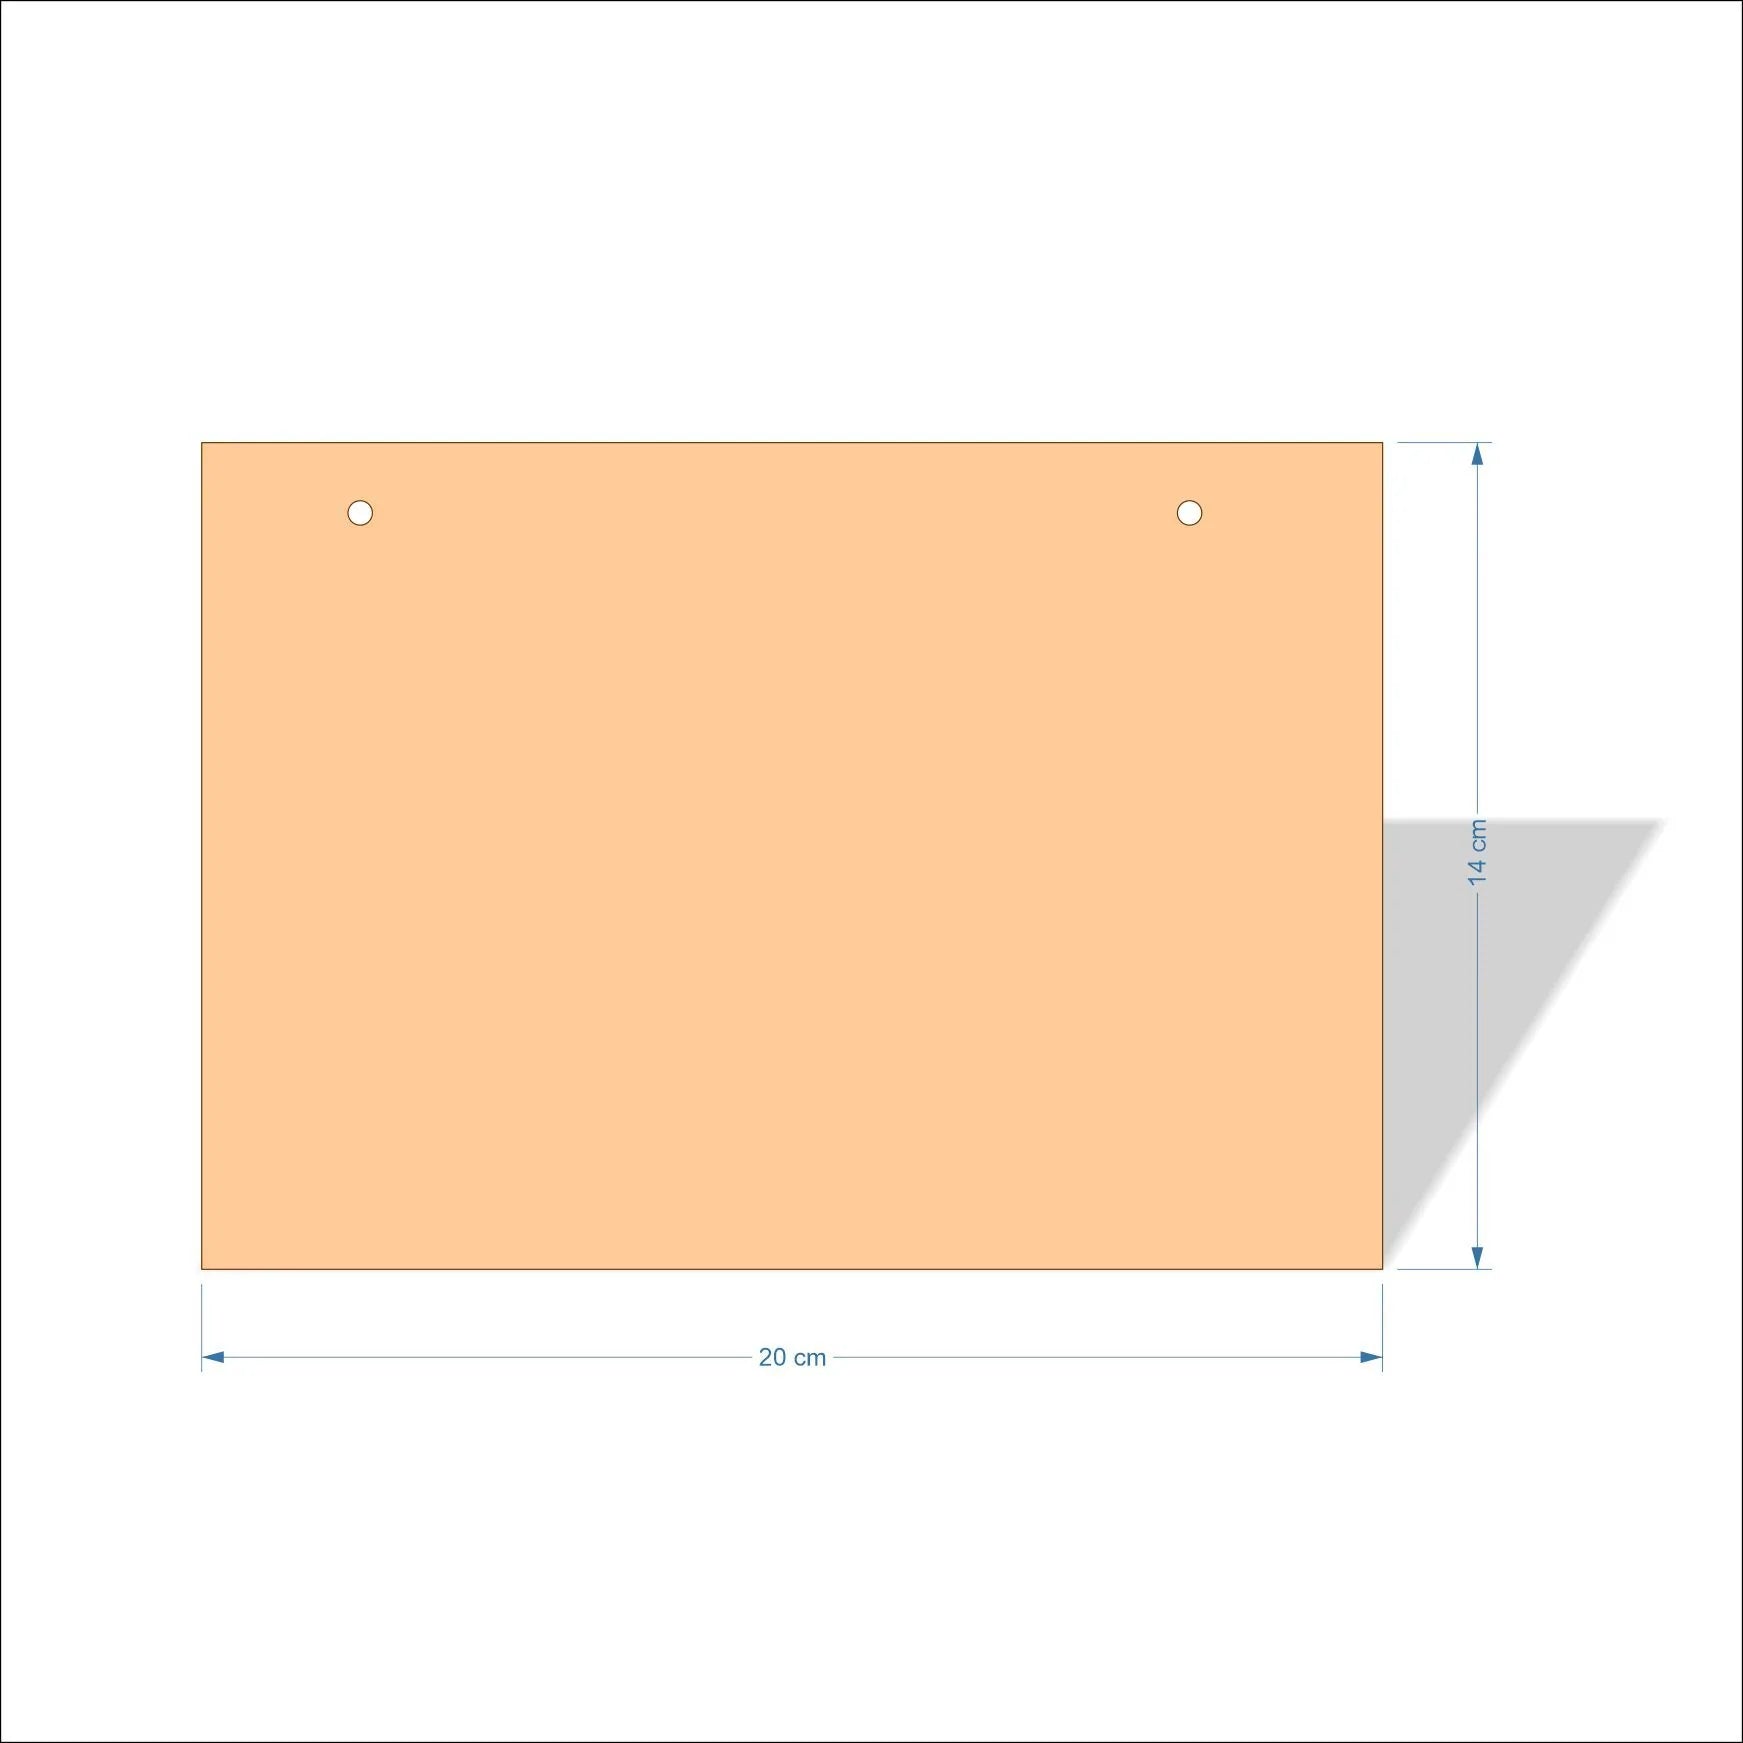 20 cm X 14 cm 4mm poplar plywood Plaques with square corners